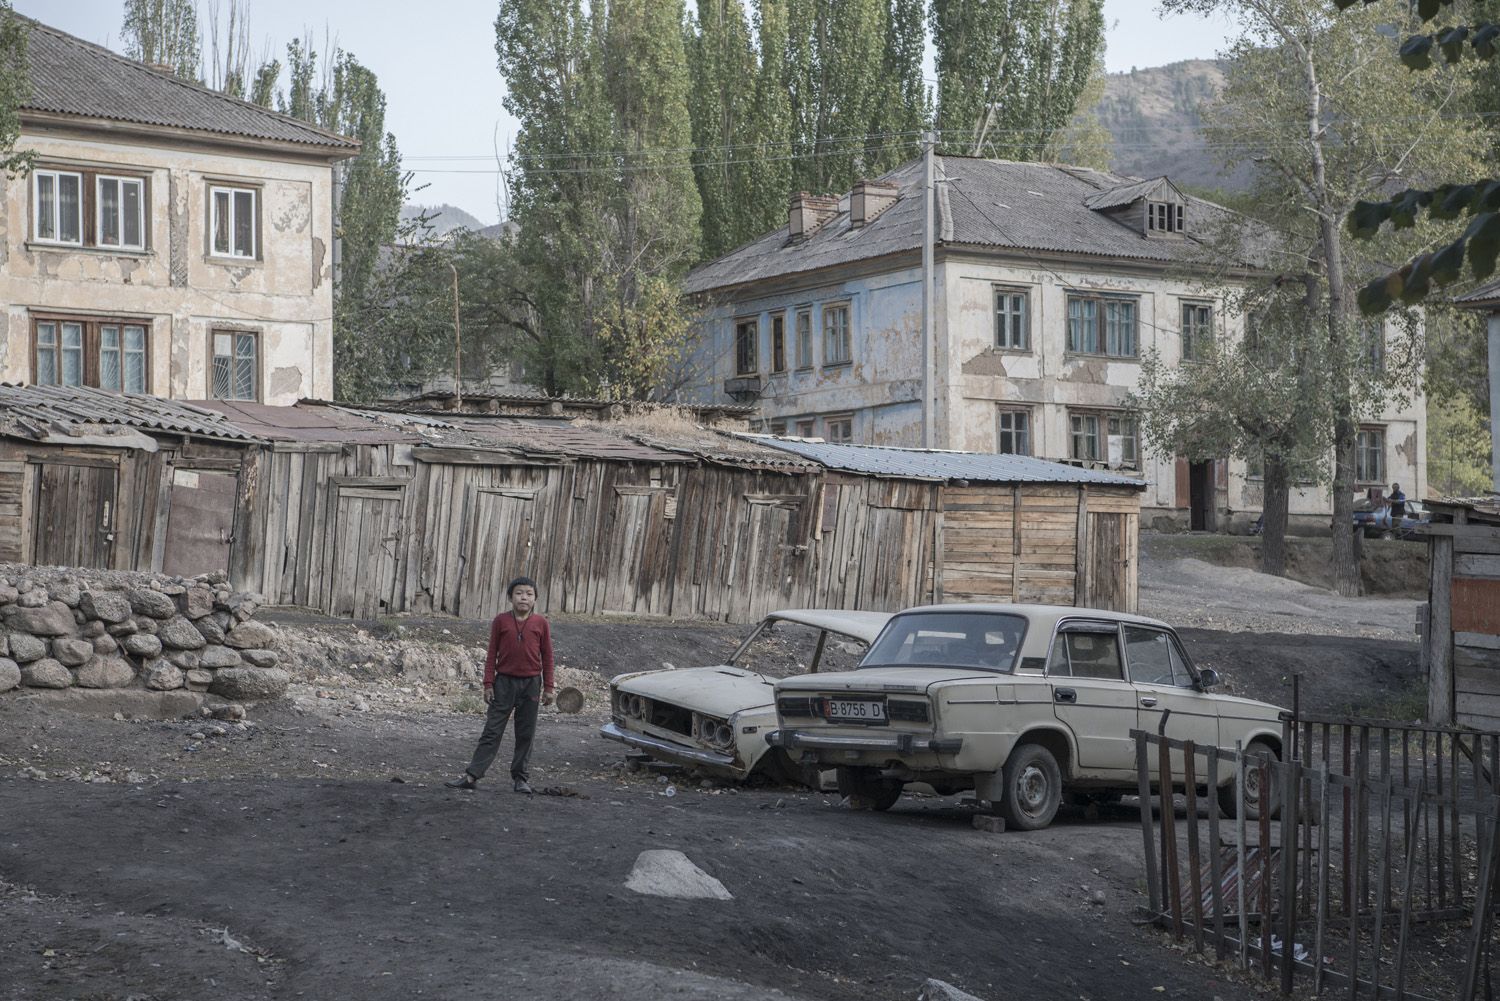 boy-ladas-abandoned-min-kush-soviet-uranium-mining-town-industrial-Russia-Kyrgyzstan-ruins-soviet-sign-jo-kearney-photos-video-photography.jpg